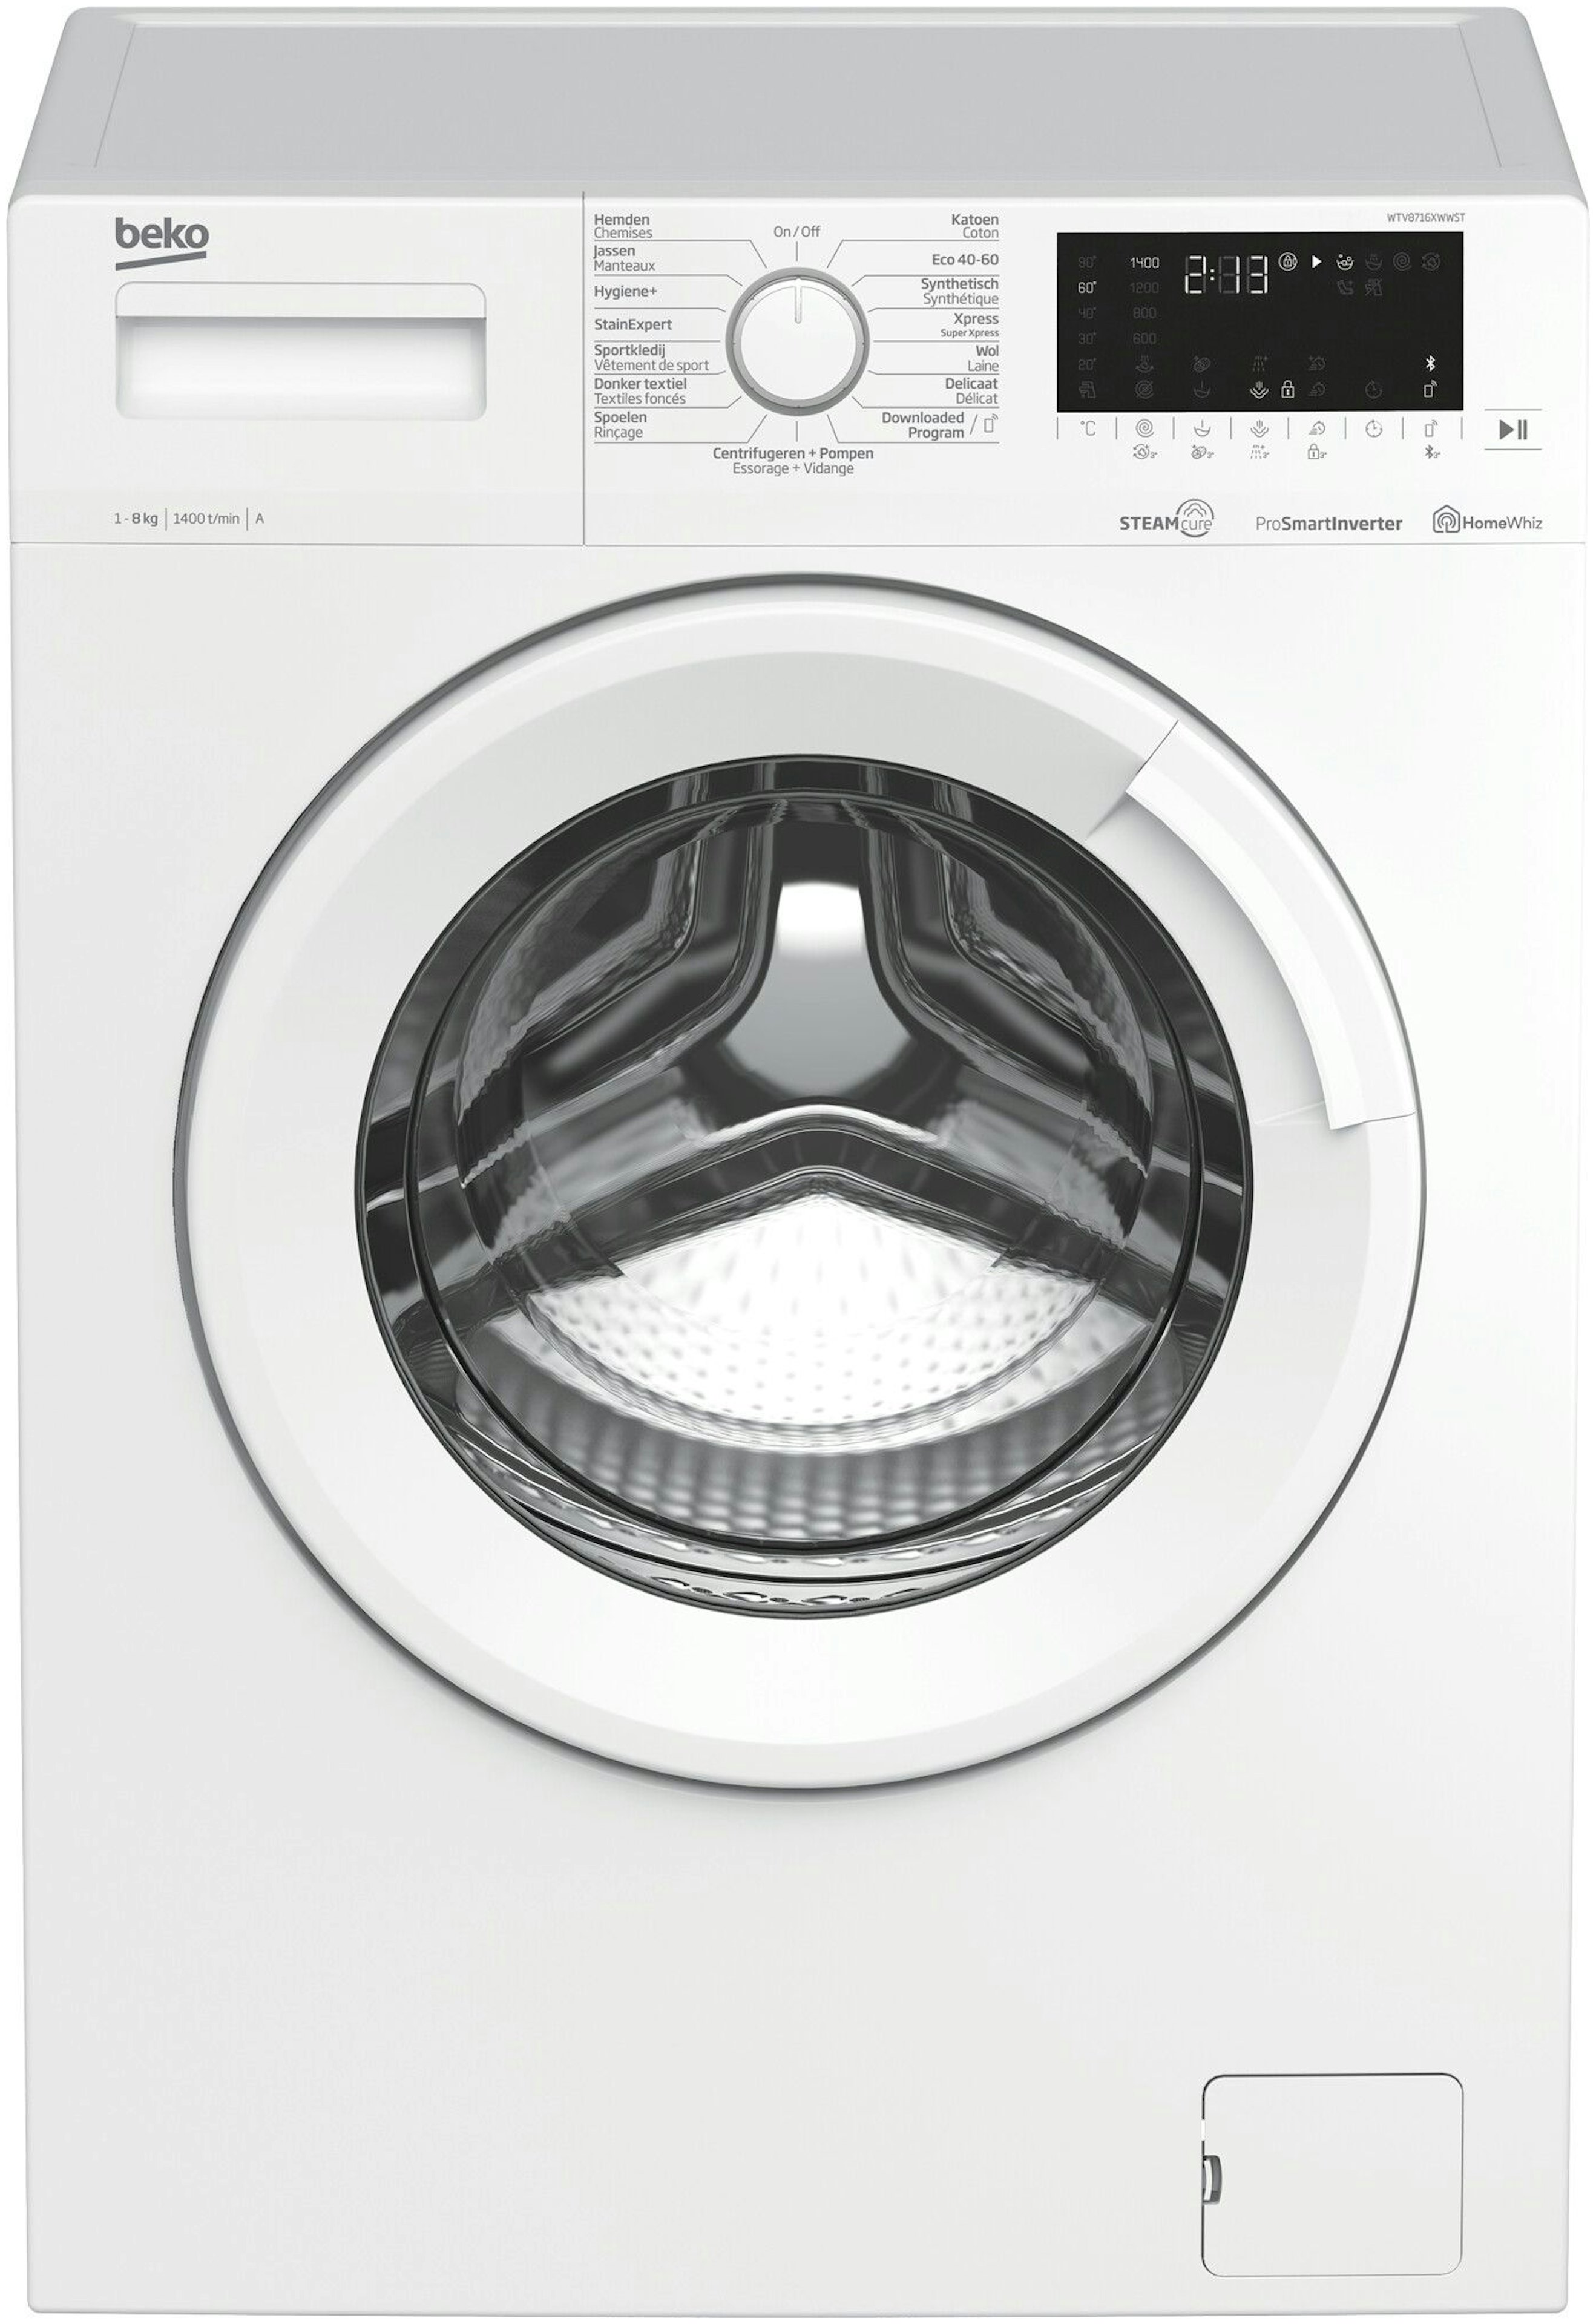 Onverbiddelijk Sta op kijken Wasmachine kopen? Alle wasmachines | Bemmel & Kroon